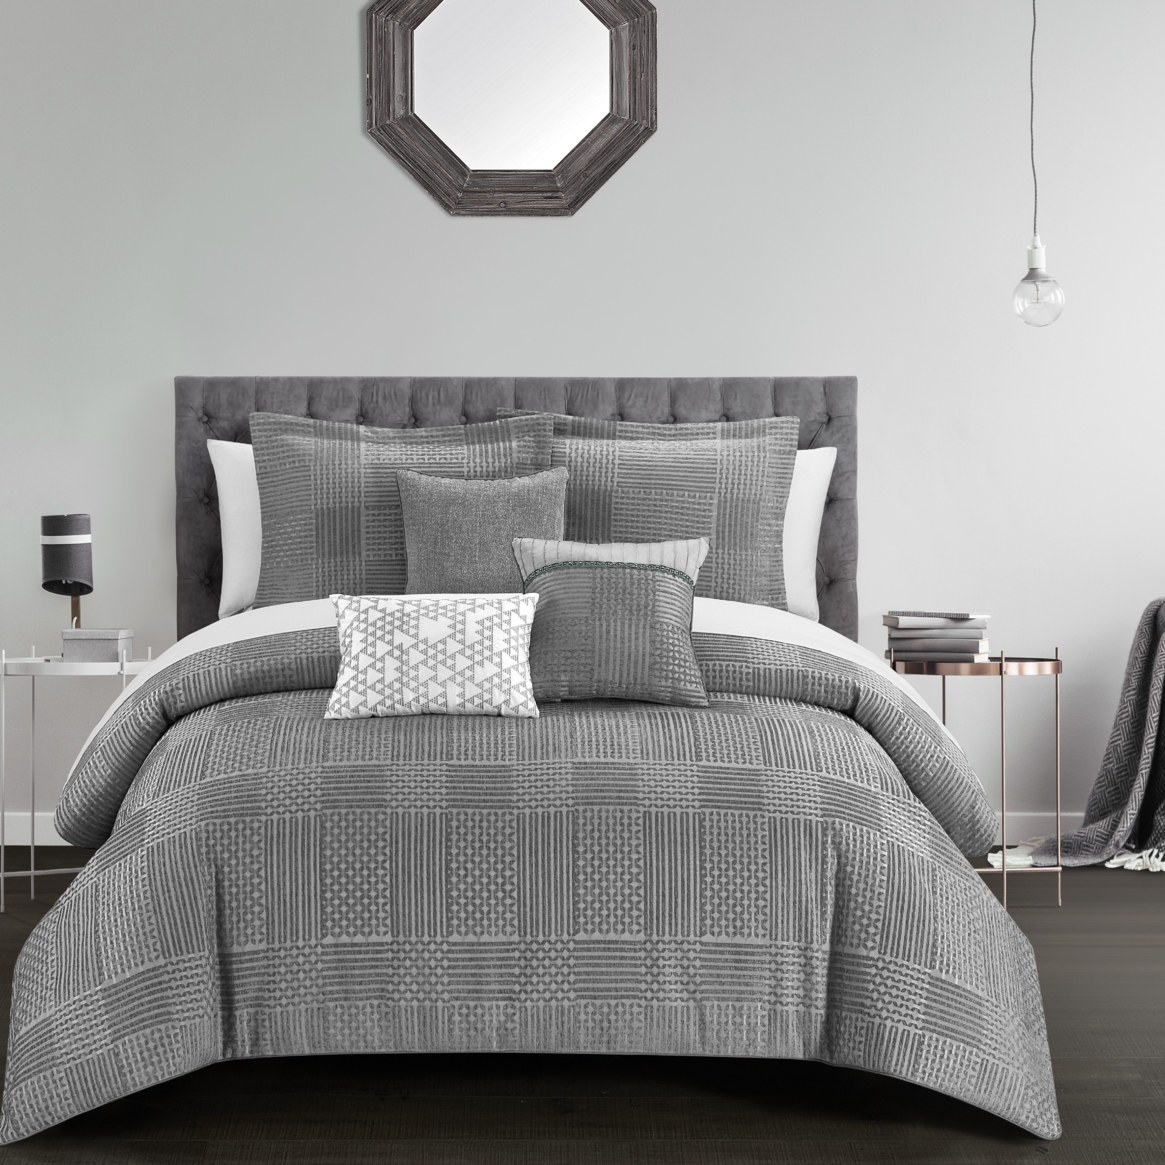 Odhi 6 or 10 Piece Comforter Set Chenille Geometric Pattern Design Bedding - grey, queen